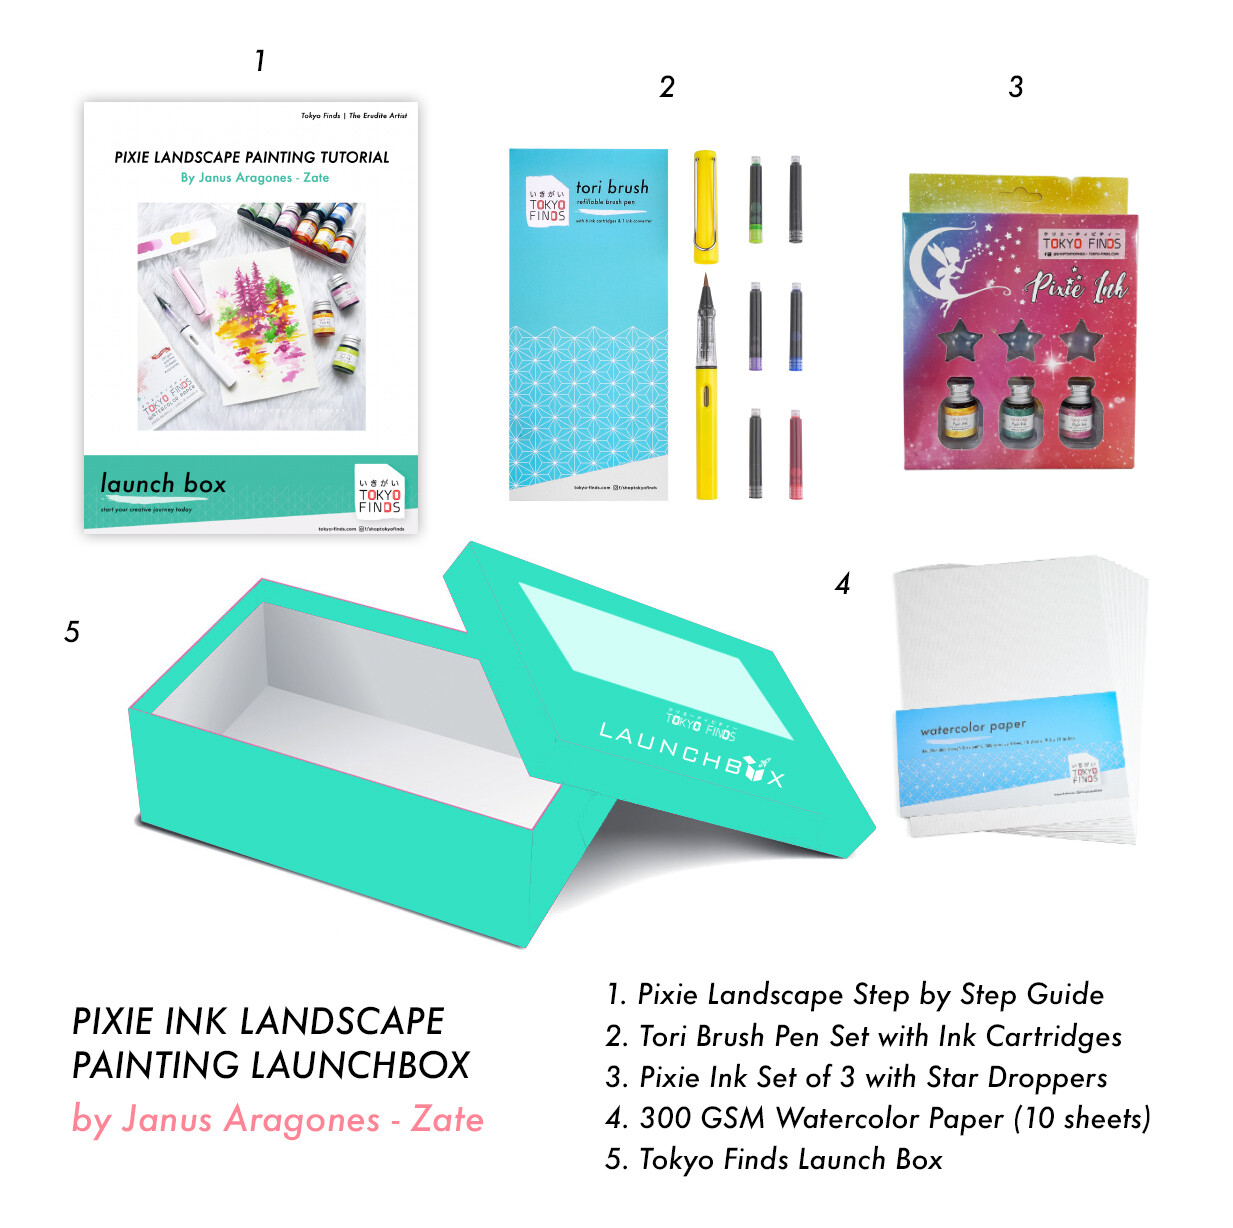 [Workshop in a Box] - Pixie Inks Landscape Launchbox by Janus Aragones - Zate